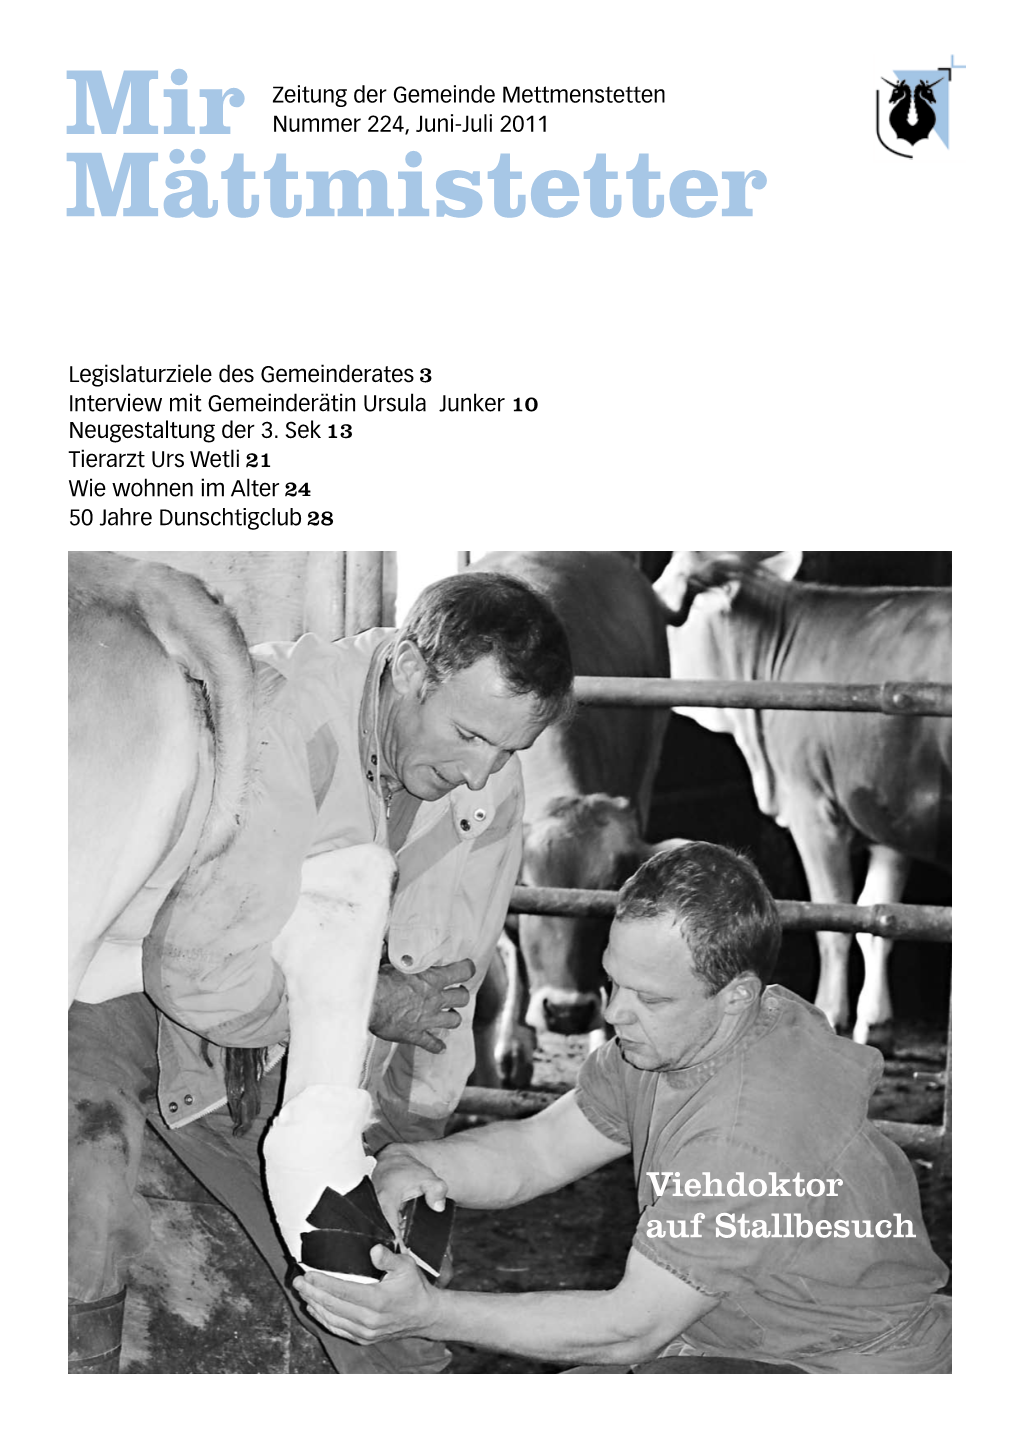 Viehdoktor Auf Stallbesuch 2 Editorial Mirmättmistetter Juni 2011